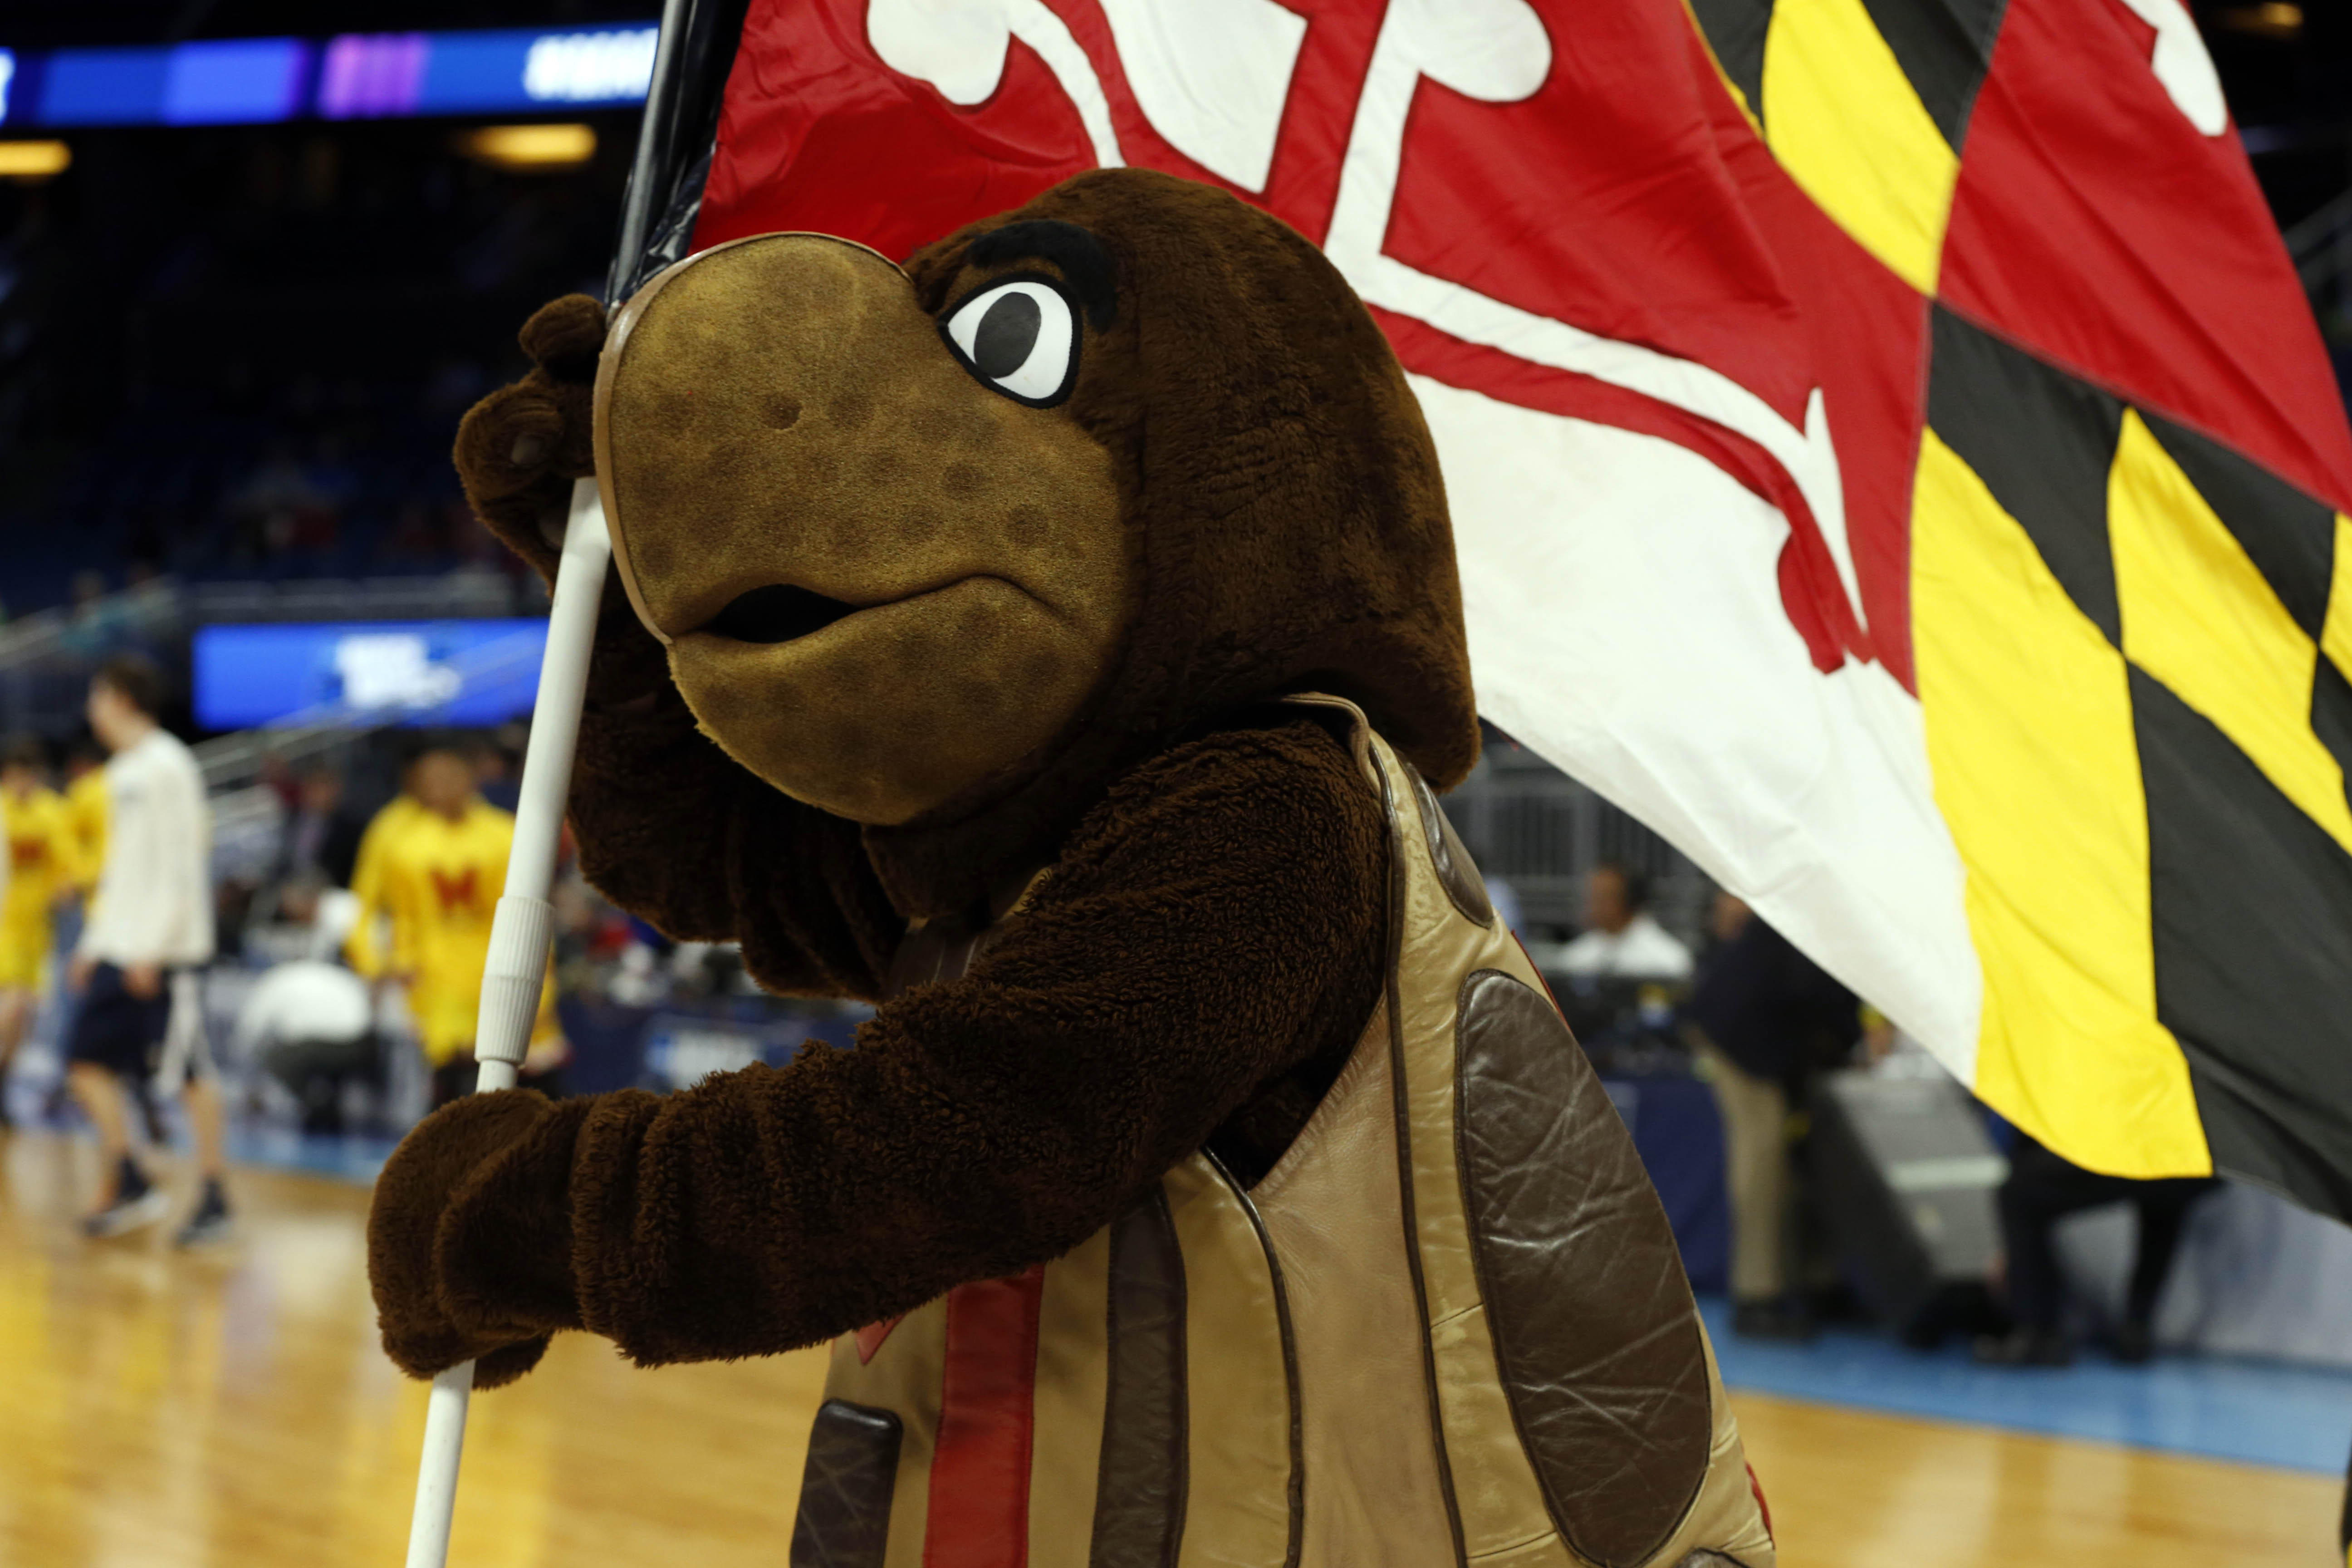 NCAA Basketball: NCAA Tournament-First Round-Maryland vs Xavier